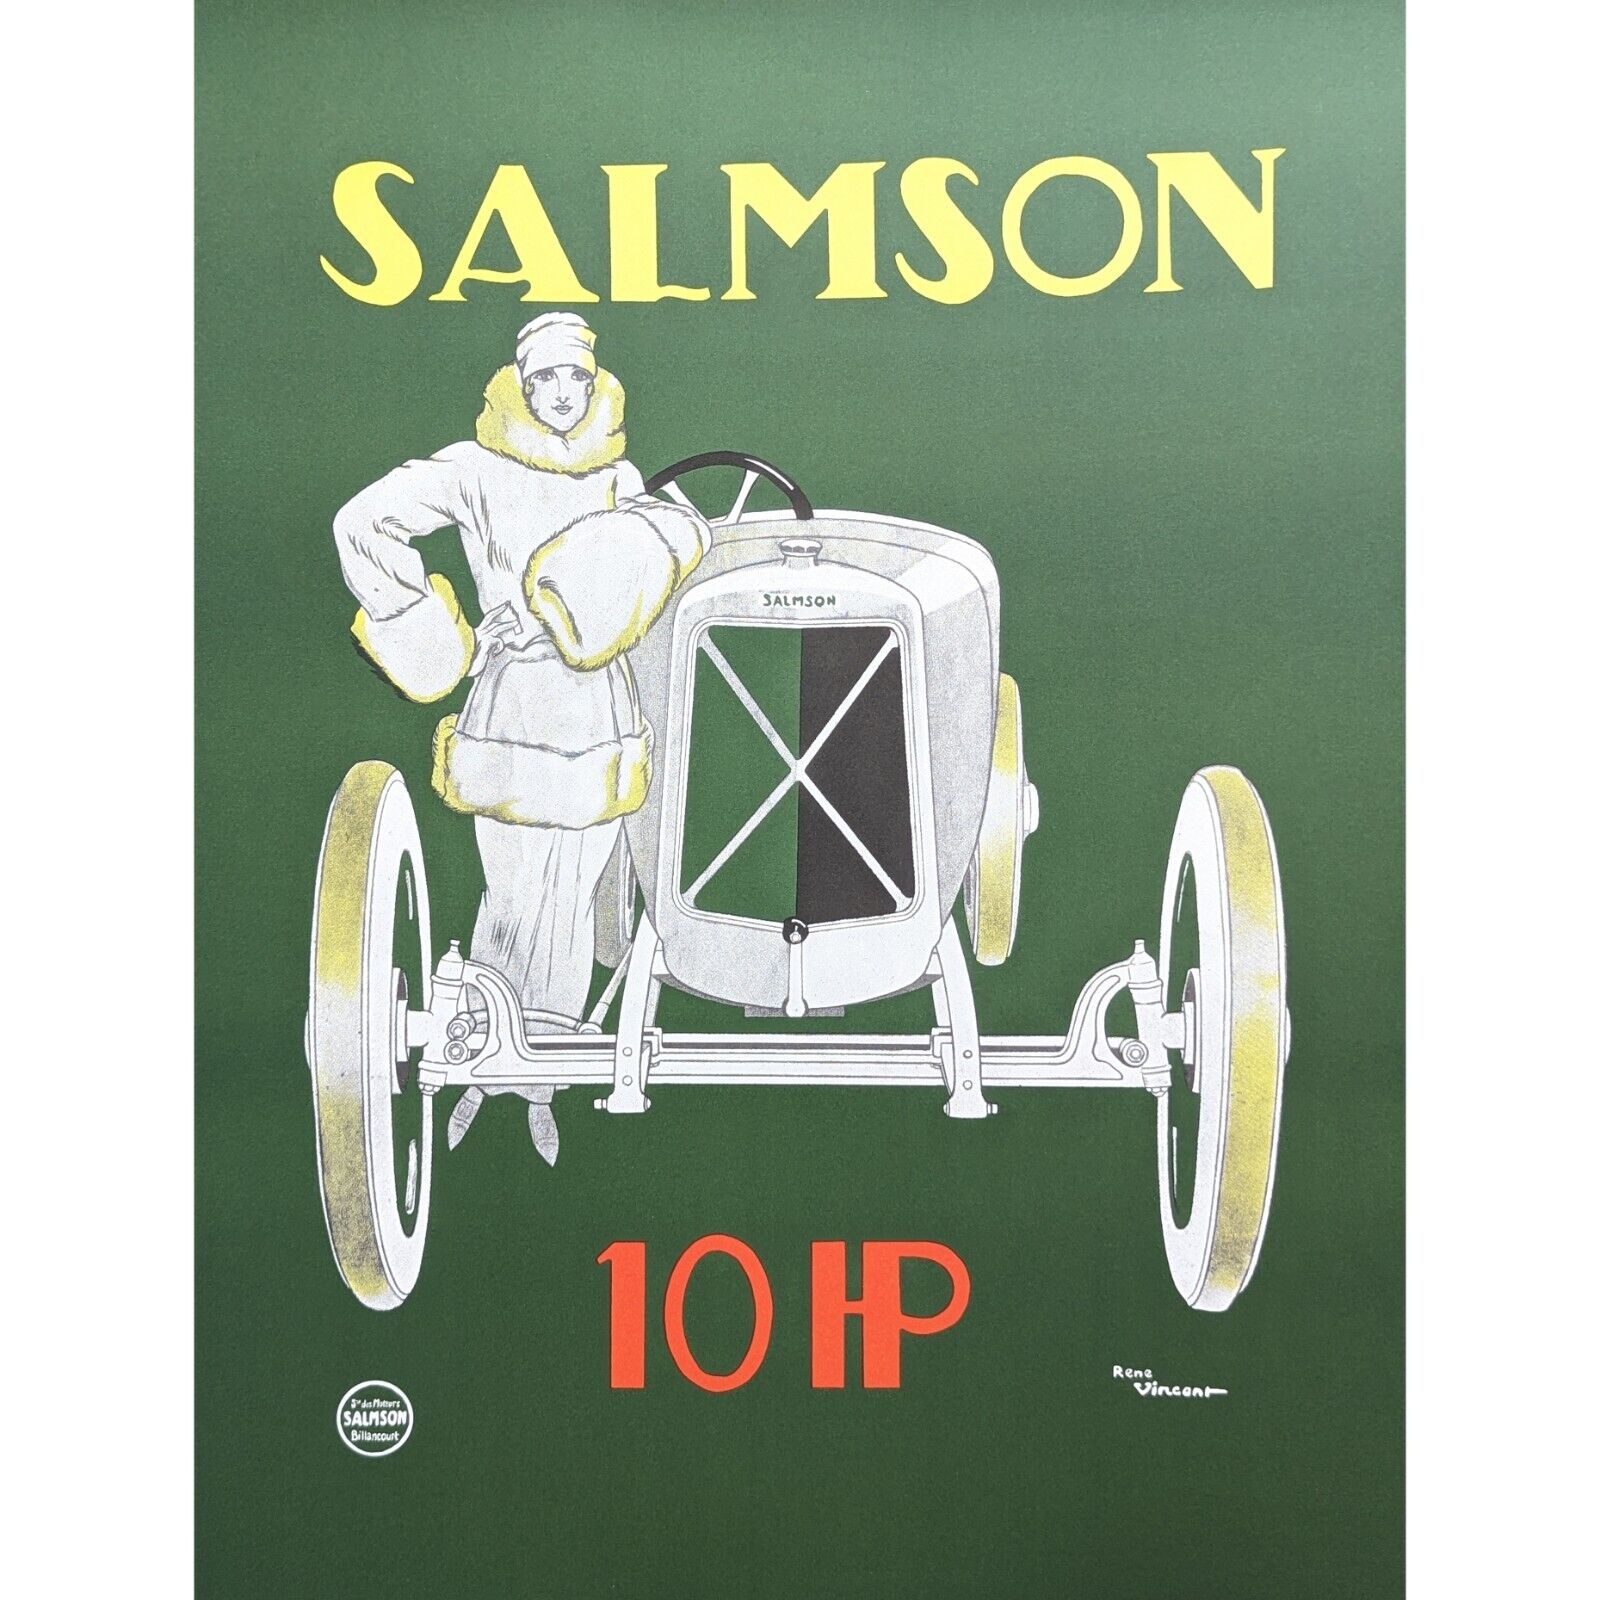 Salmson 10 HP vintage car poster